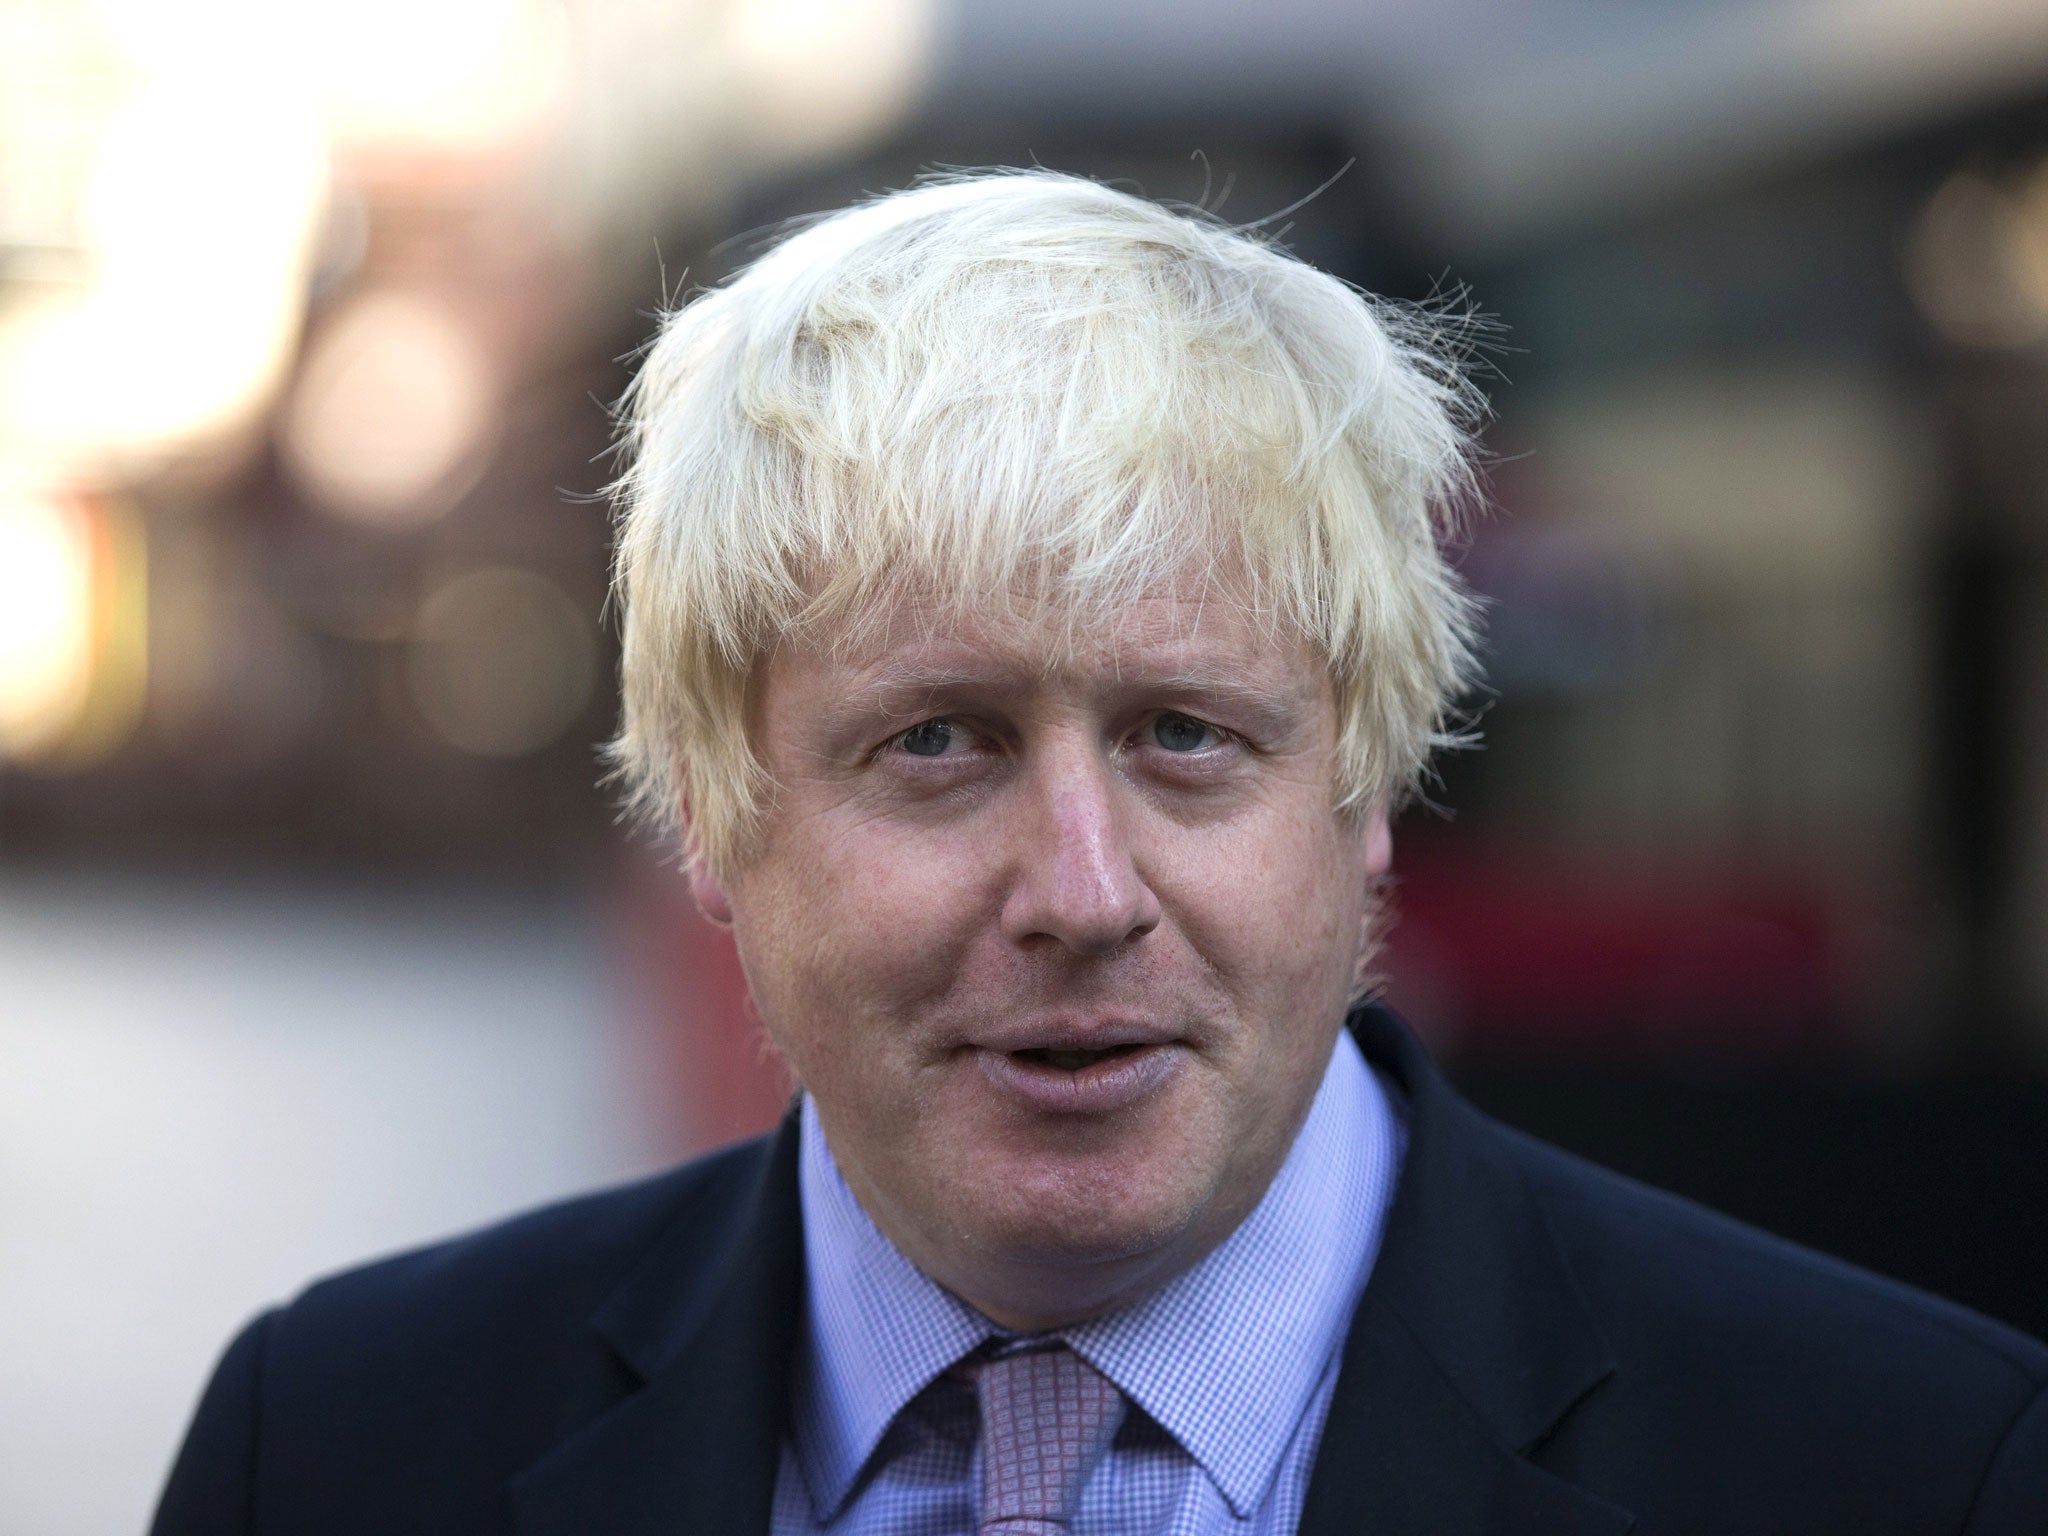 Boris Johnson attempted to intervene in the incident